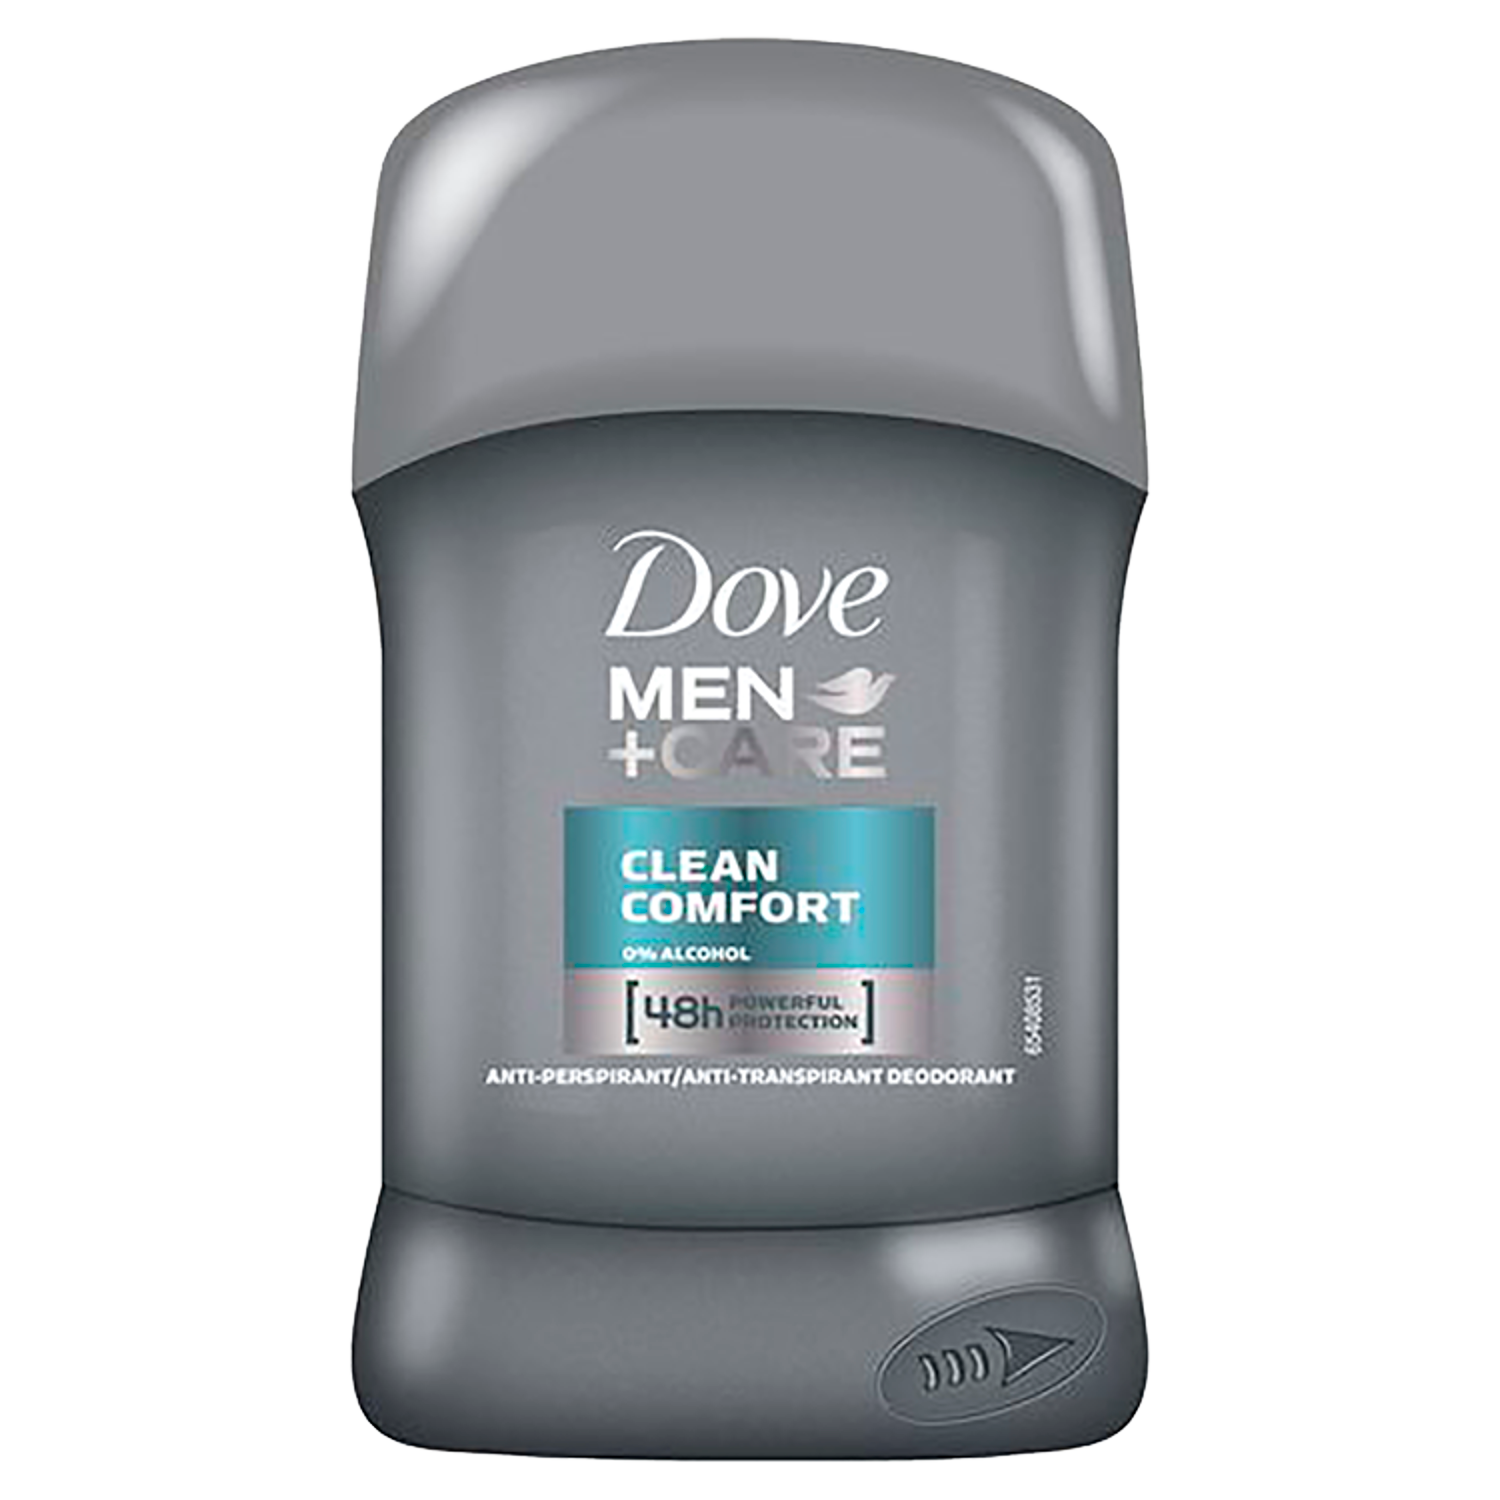 Dove Men Care Clean Comfort мужской стик-антиперспирант, 50 мл шариковый антиперспирант advanced clean comfort 50 мл dove men care